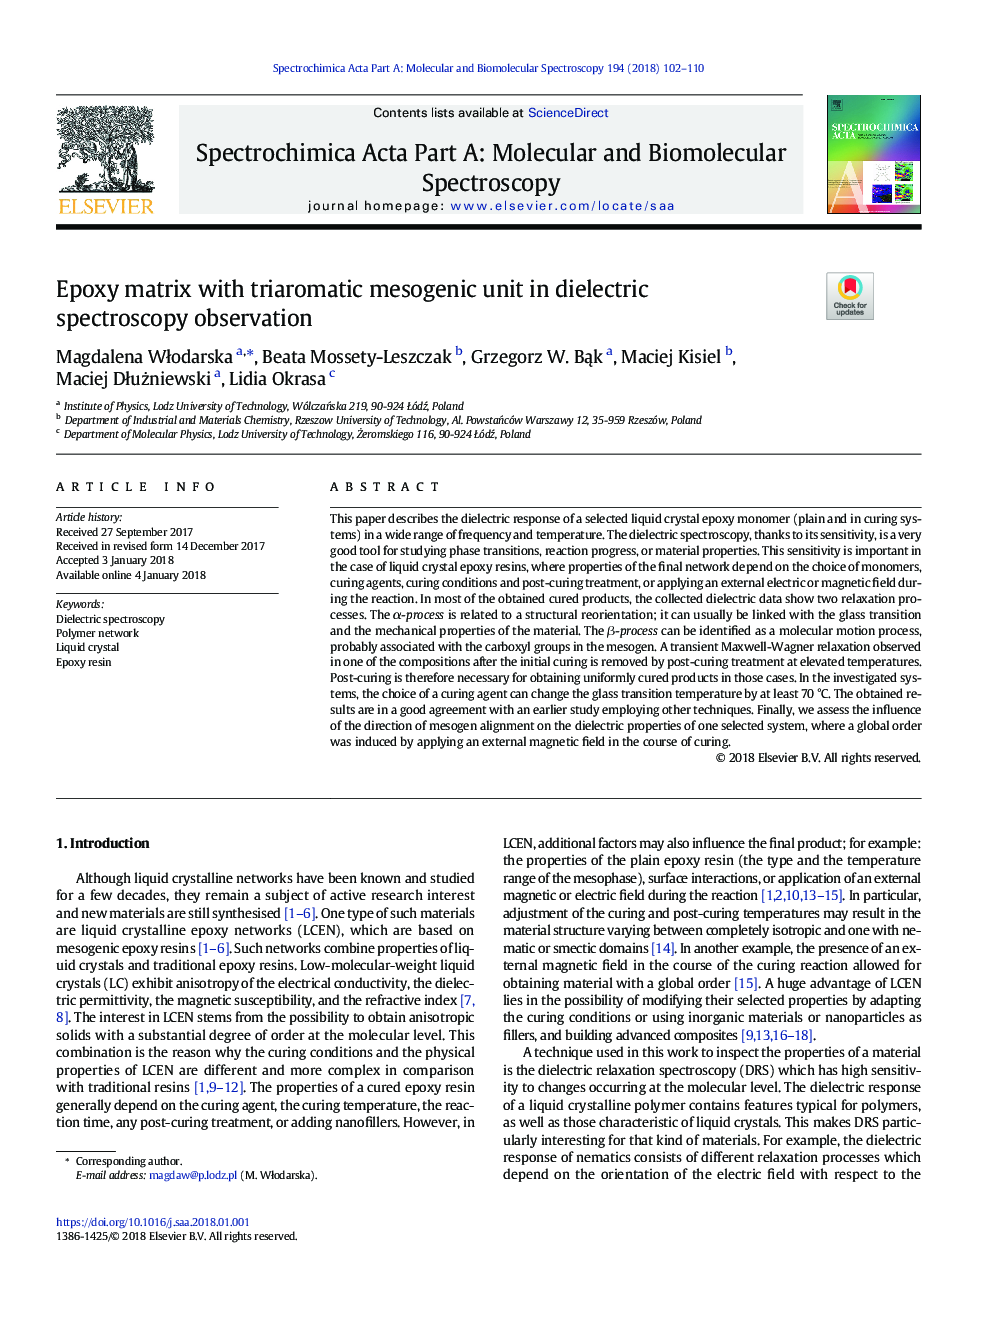 Epoxy matrix with triaromatic mesogenic unit in dielectric spectroscopy observation